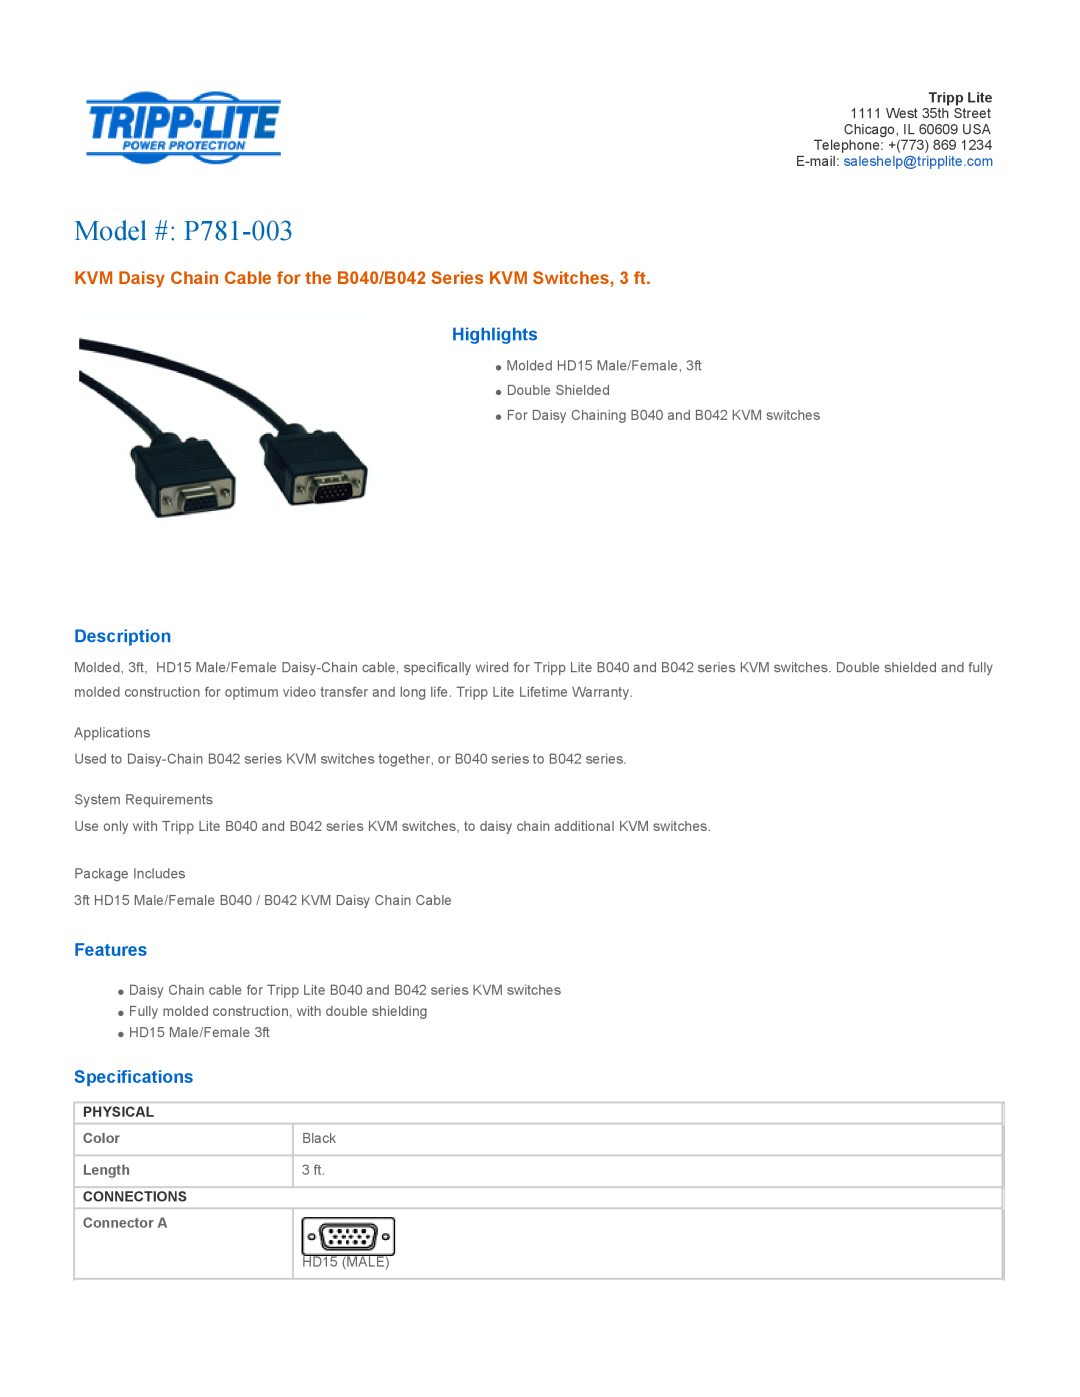 Tripp Lite specifications Color, Black, Length, 3 ft, Connector A, HD15 MALE, Model # P781-003, Highlights, Description 